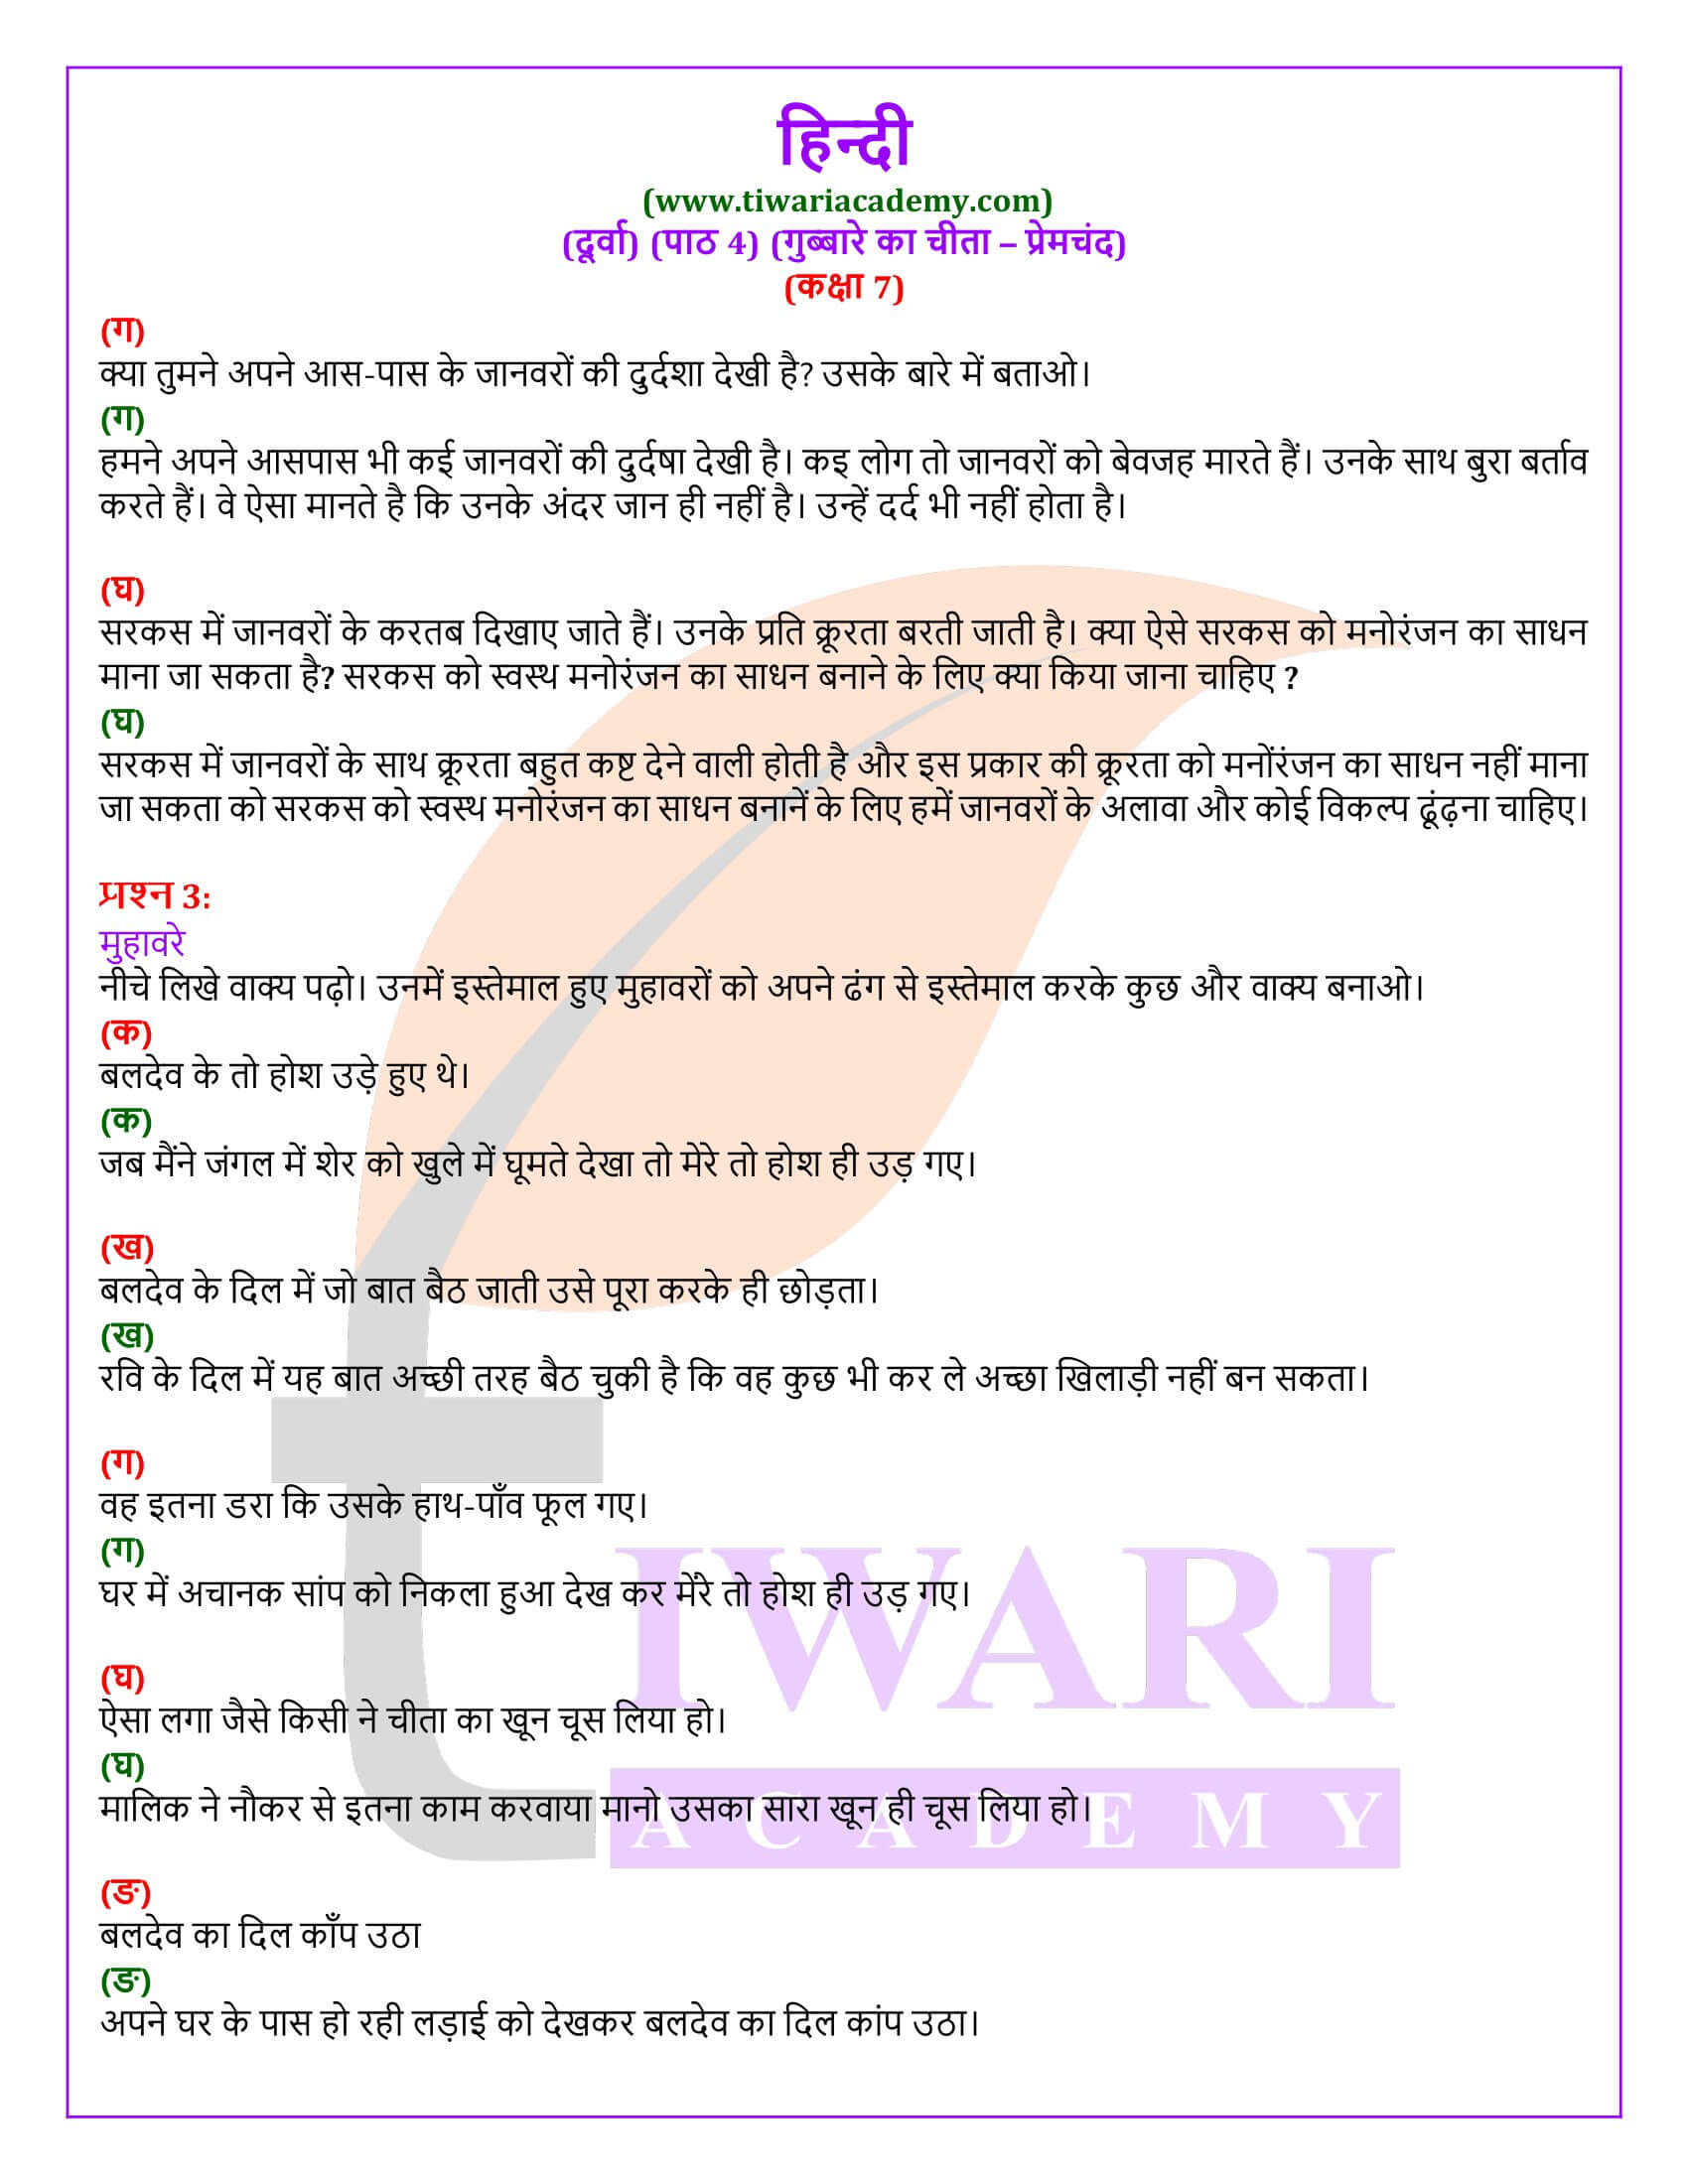 कक्षा 7 हिंदी दूर्वा अध्याय 4 गुब्बारे पर चीता